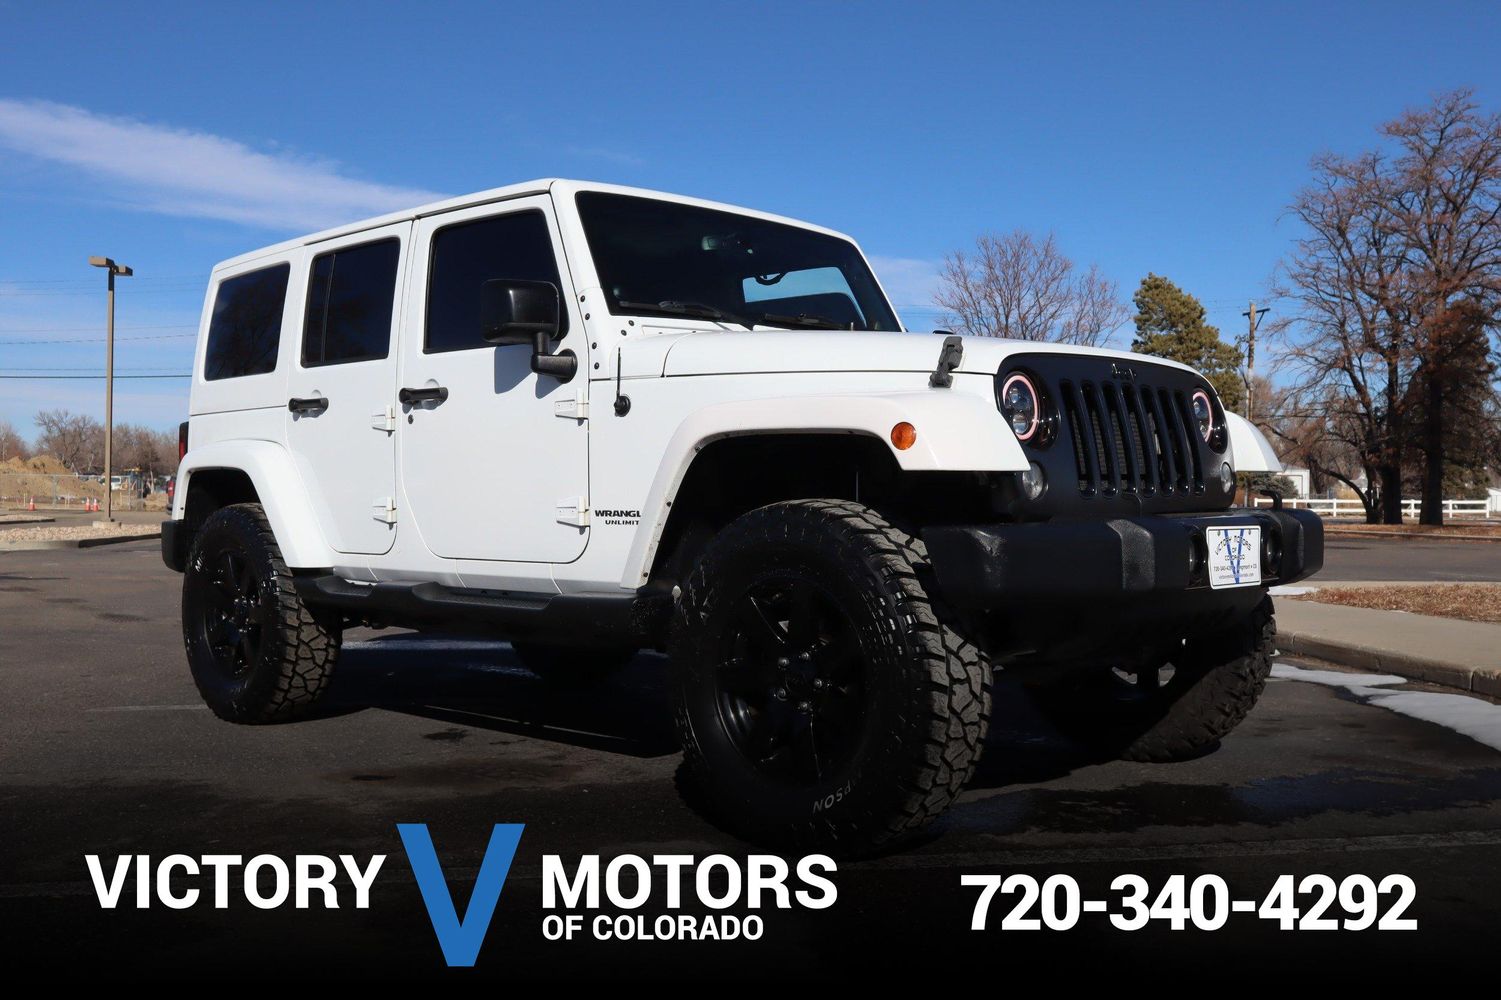 2014 Jeep Wrangler Unlimited Sahara | Victory Motors of Colorado